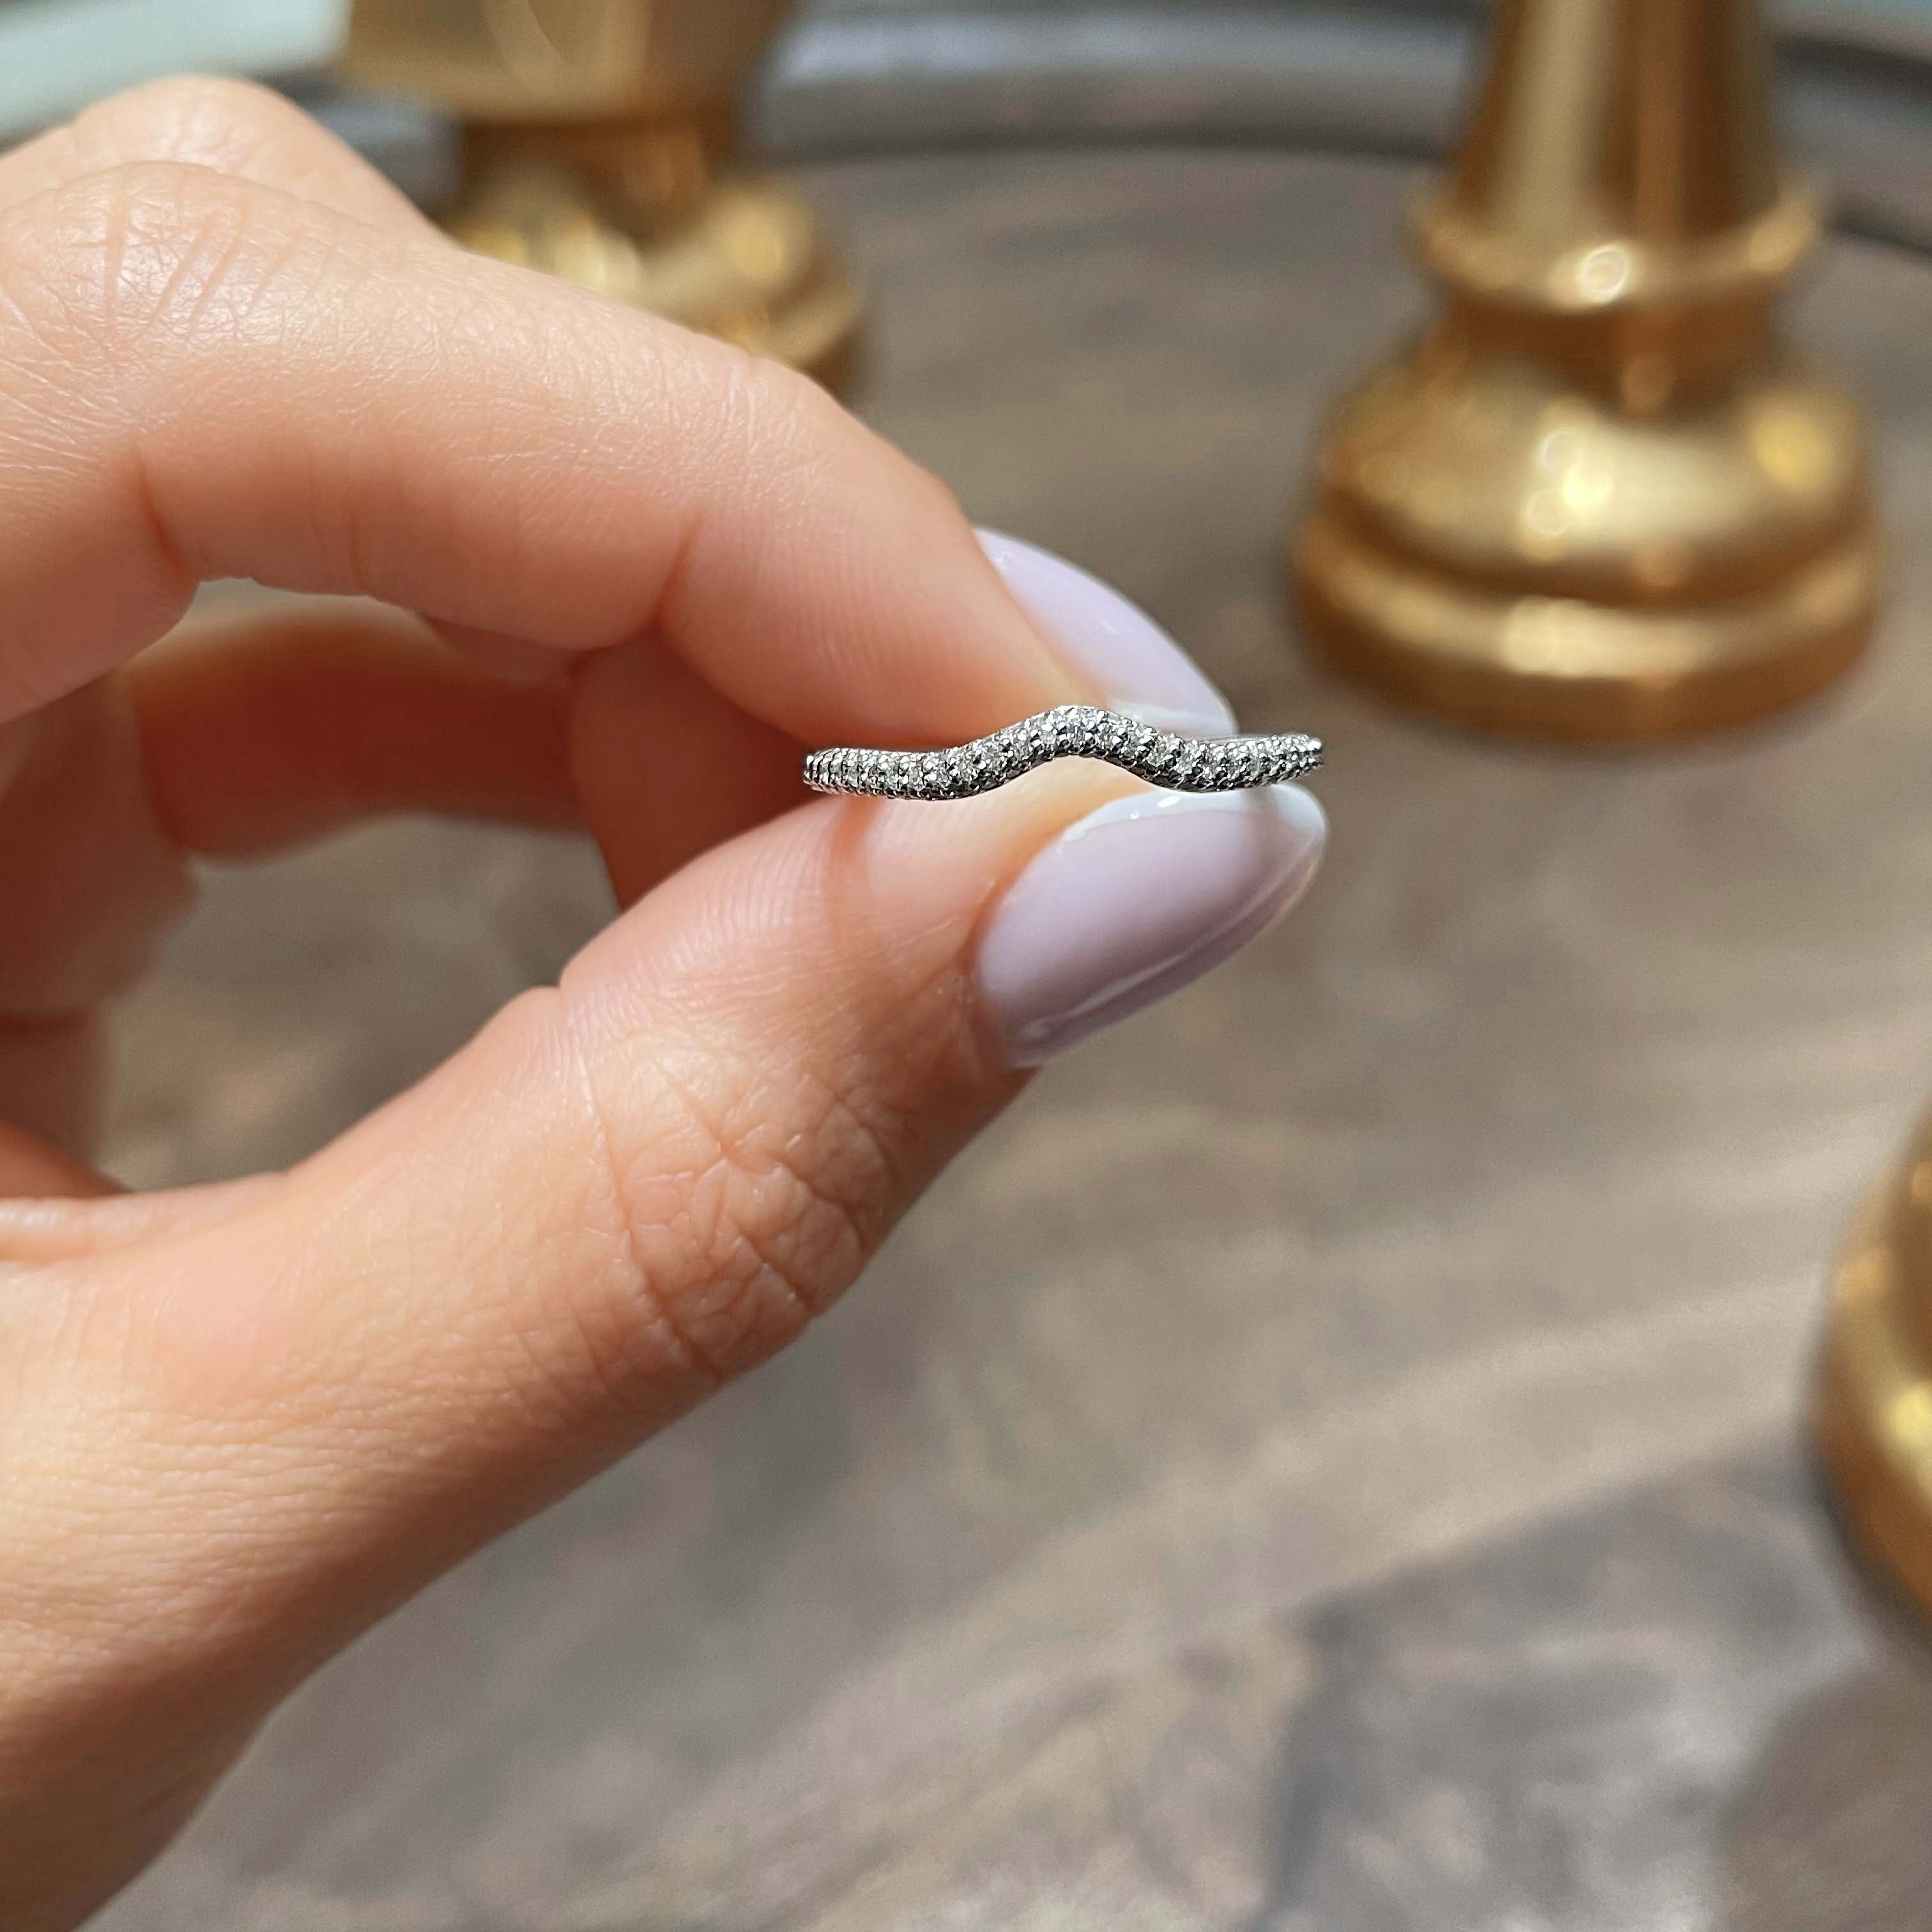 Anastasia Curved Wedding Ring   (0.75 Carat) -Platinum